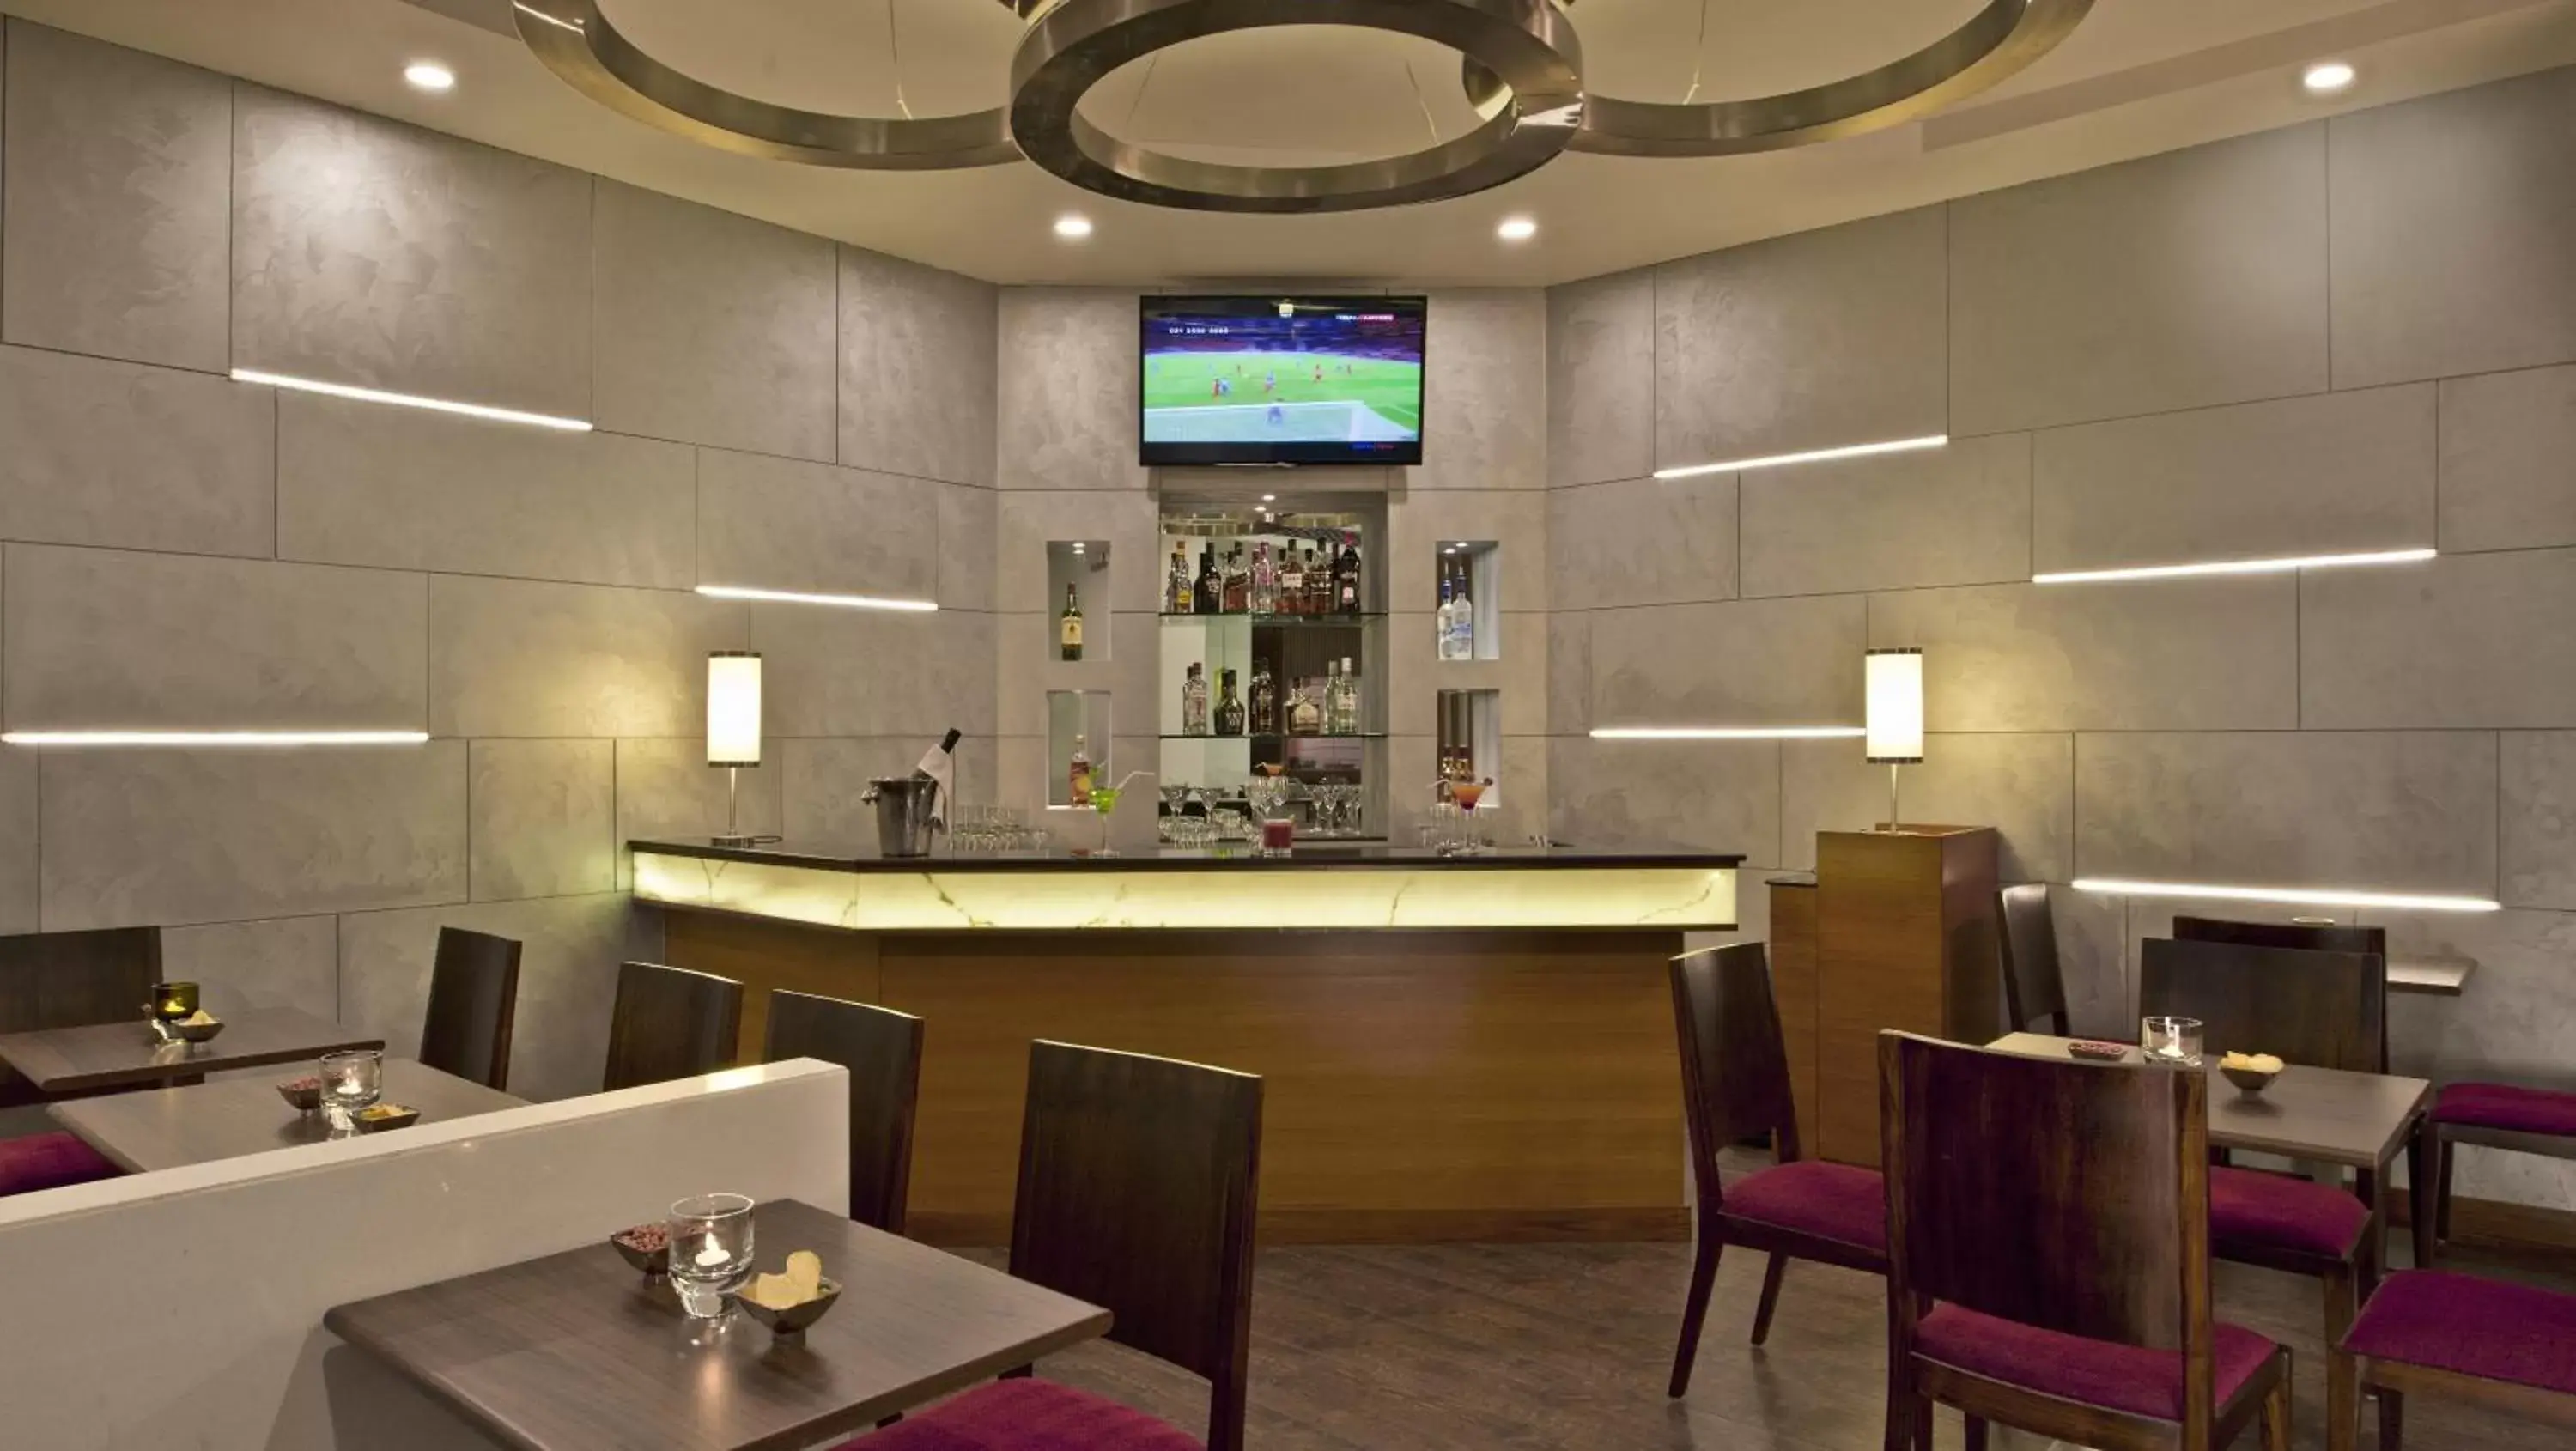 Lounge or bar, Restaurant/Places to Eat in Nirwana Hometel Jaipur- A Sarovar Hotel